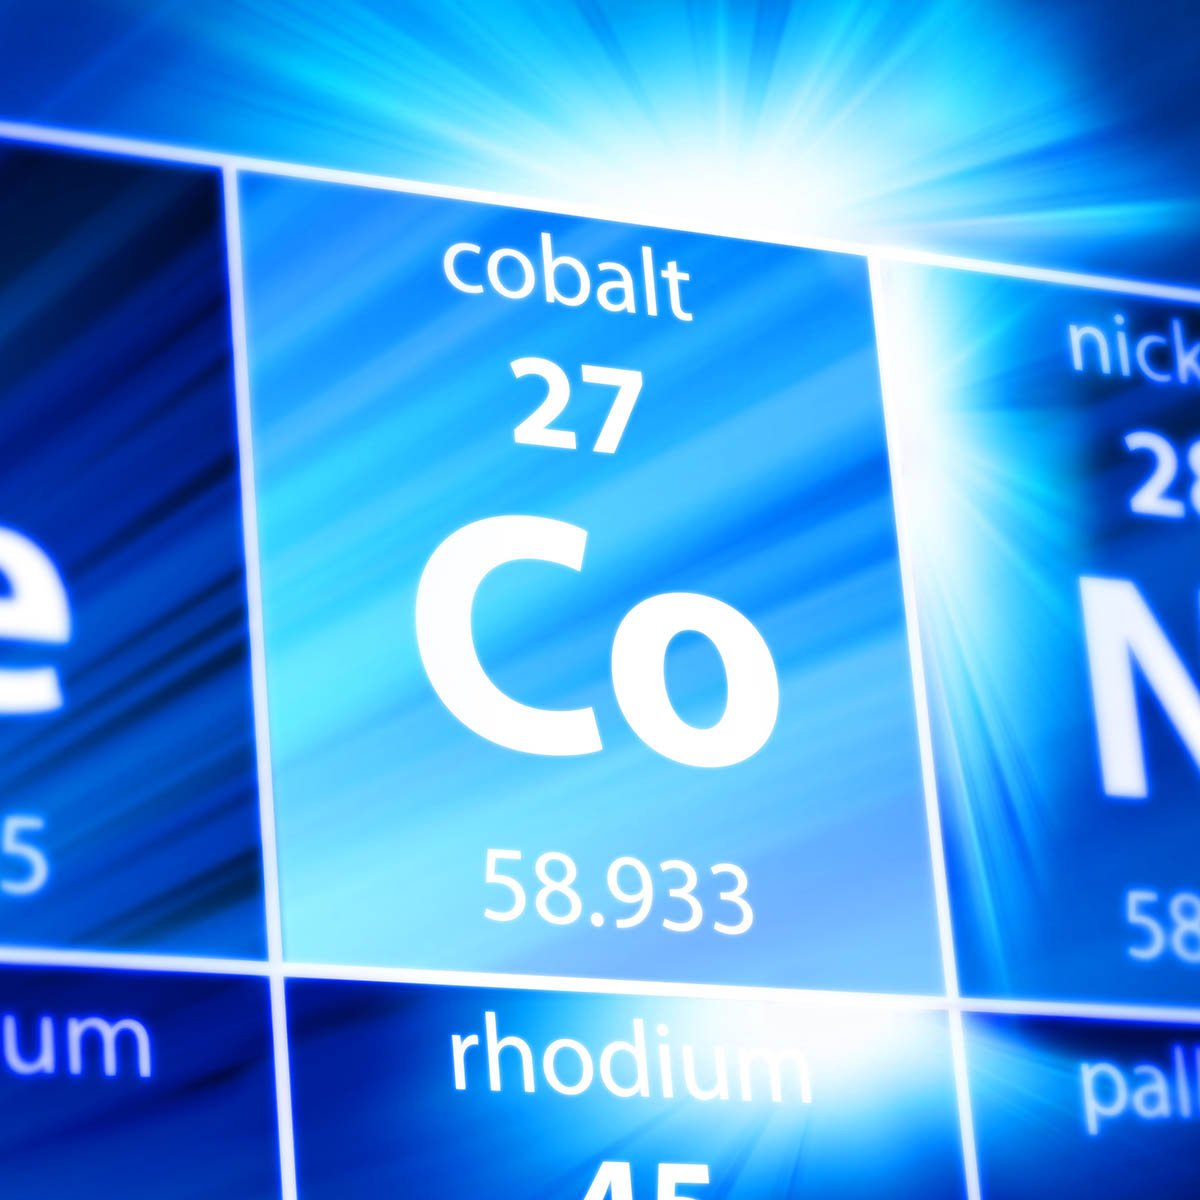 cobalt chemistry